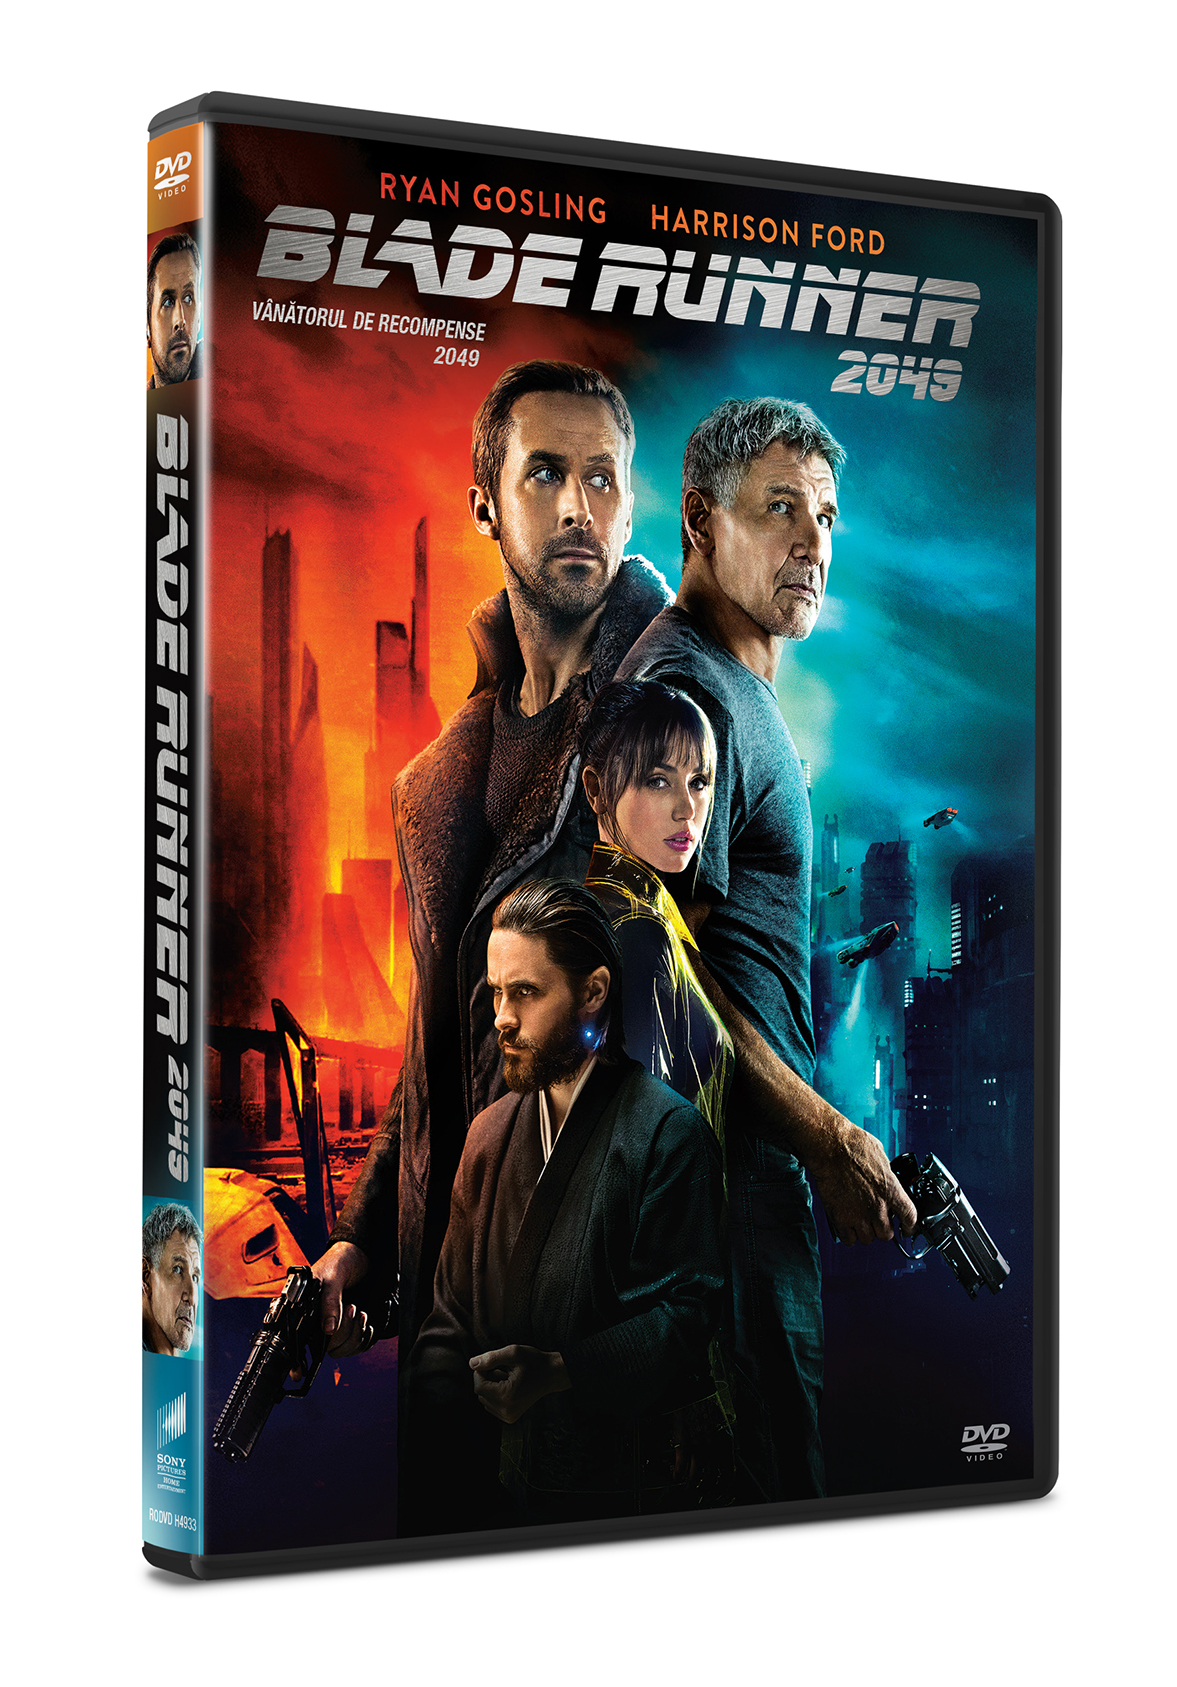 Vanatorul de recompense 2049 / Blade Runner 2049 | Denis Villeneuve